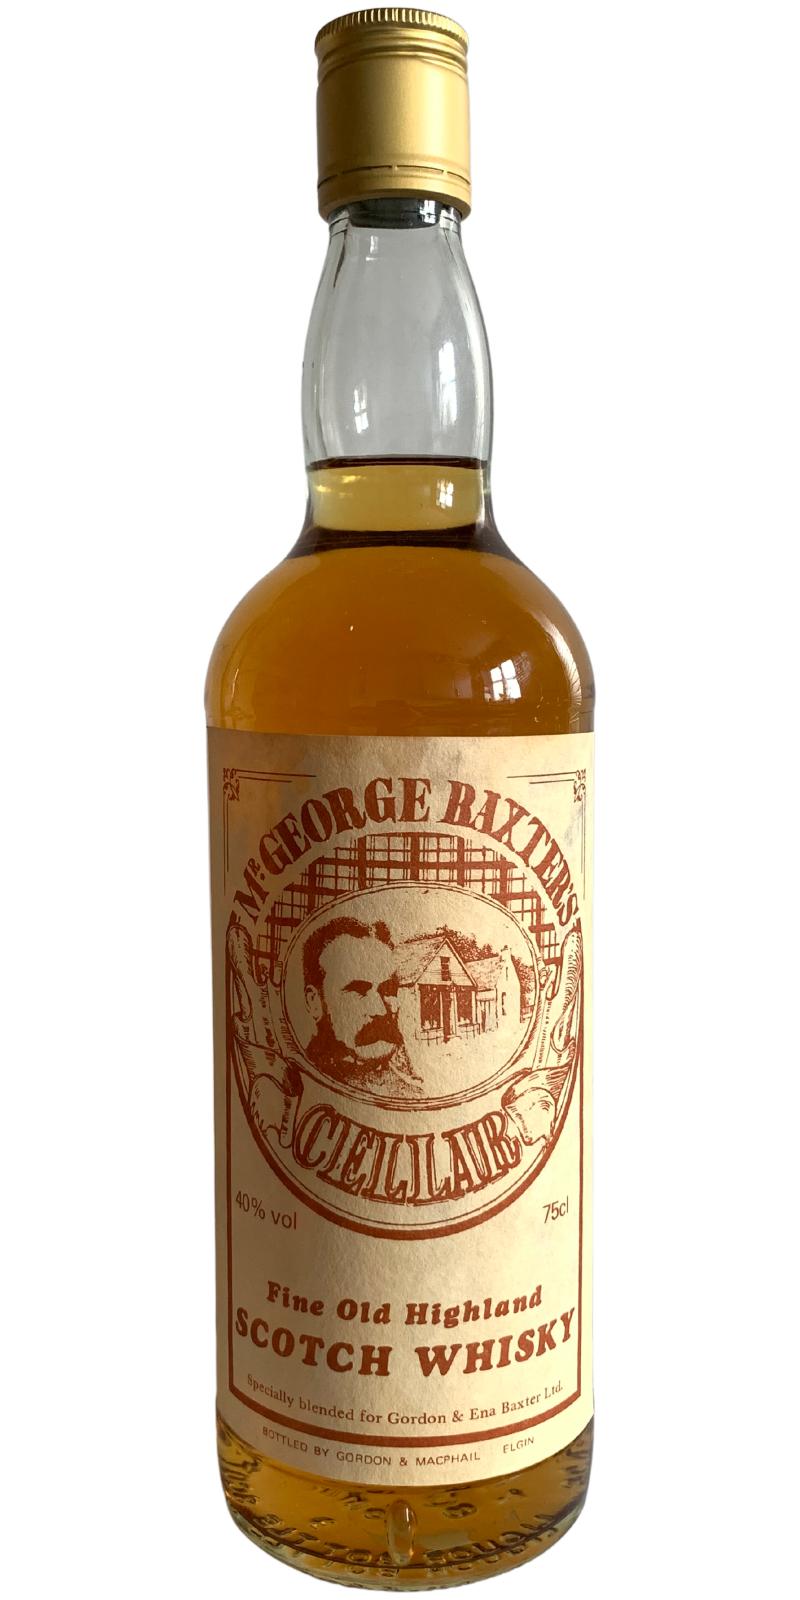 Mr. George Baxter's Cellar Fine Old Highland Scotch Whisky